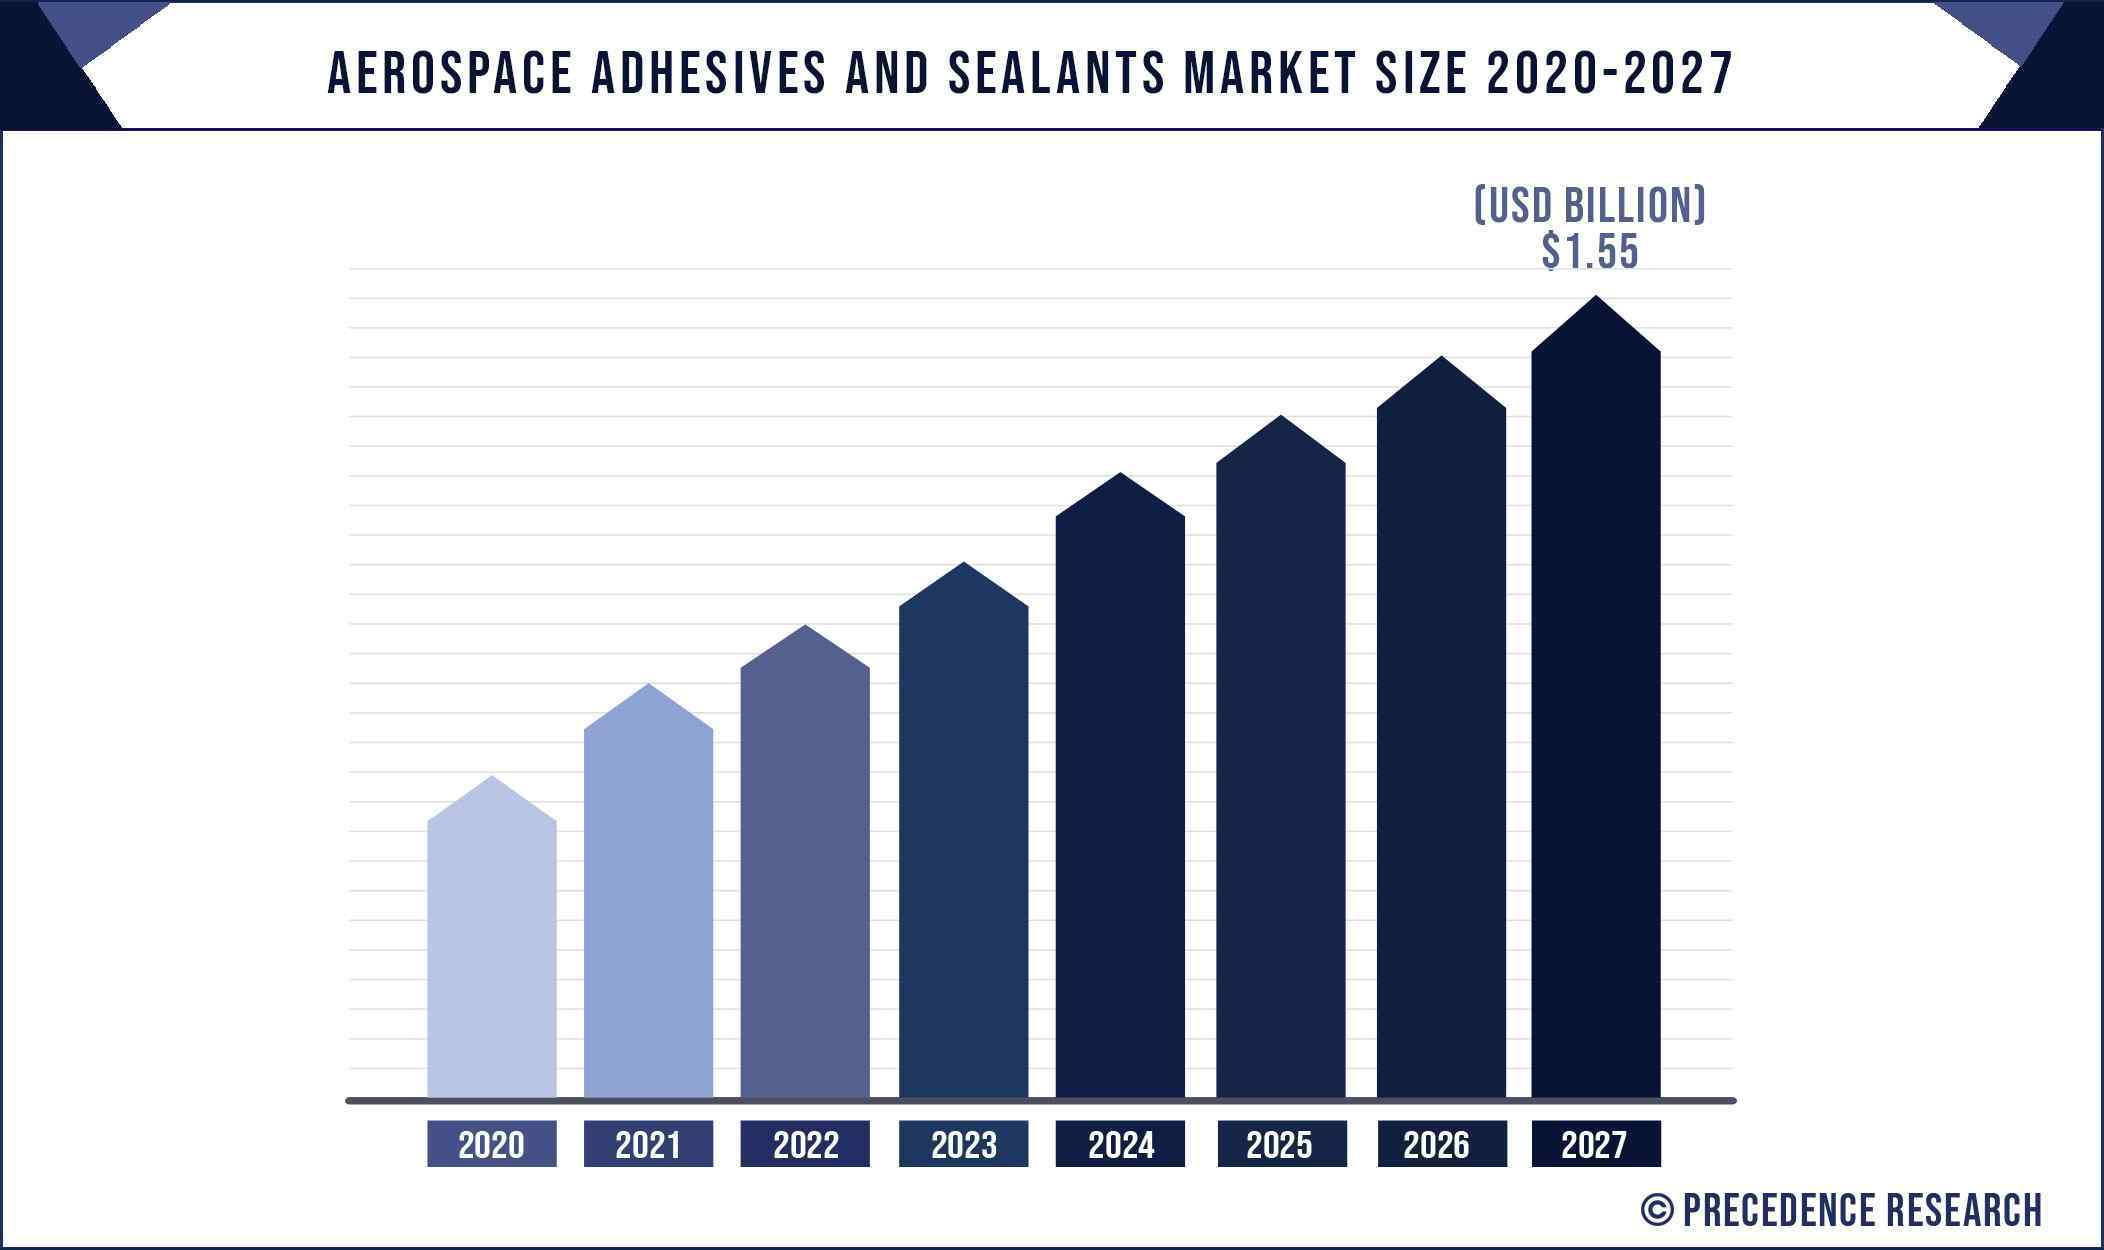 Aerospace Adhesives and Sealants Market Size 2020 to 2027